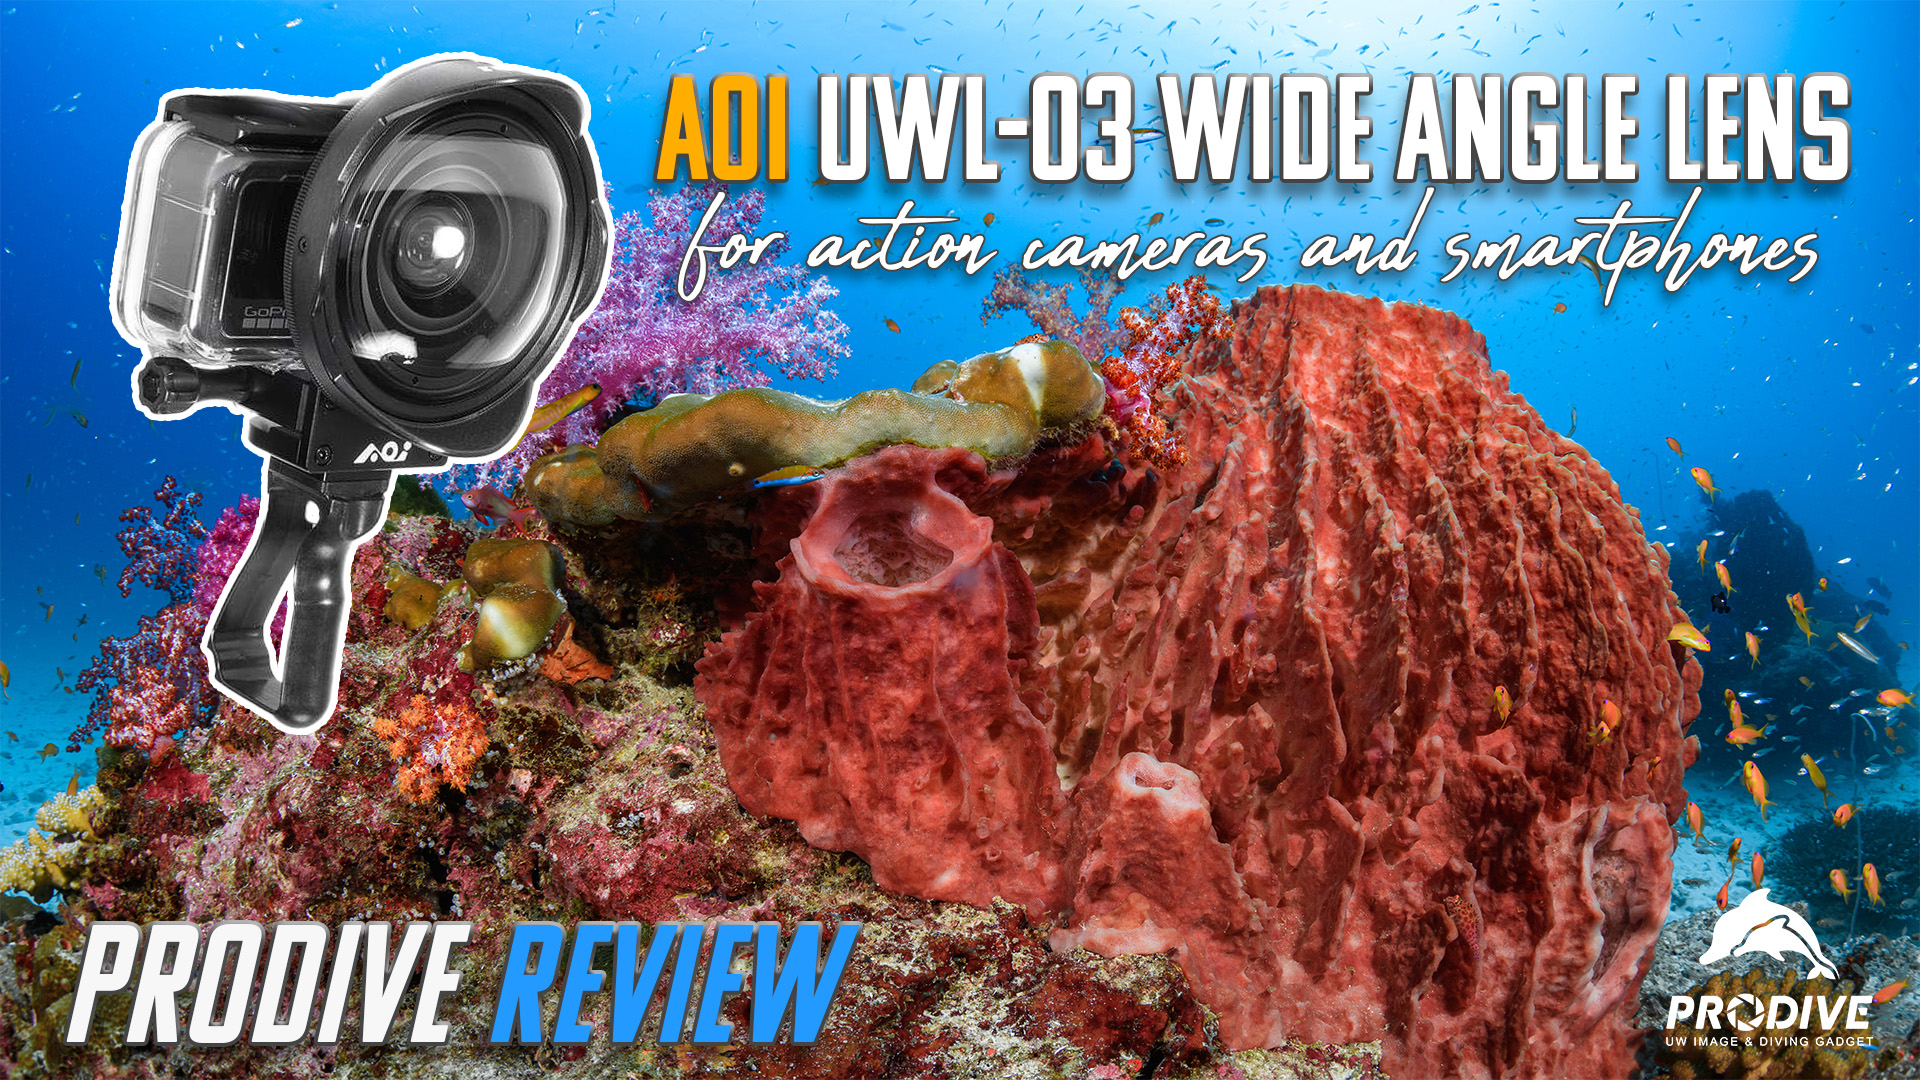 PRODIVE REVIEW : เลนส์มุมกว้างใต้น้ำ AOI UWL-03